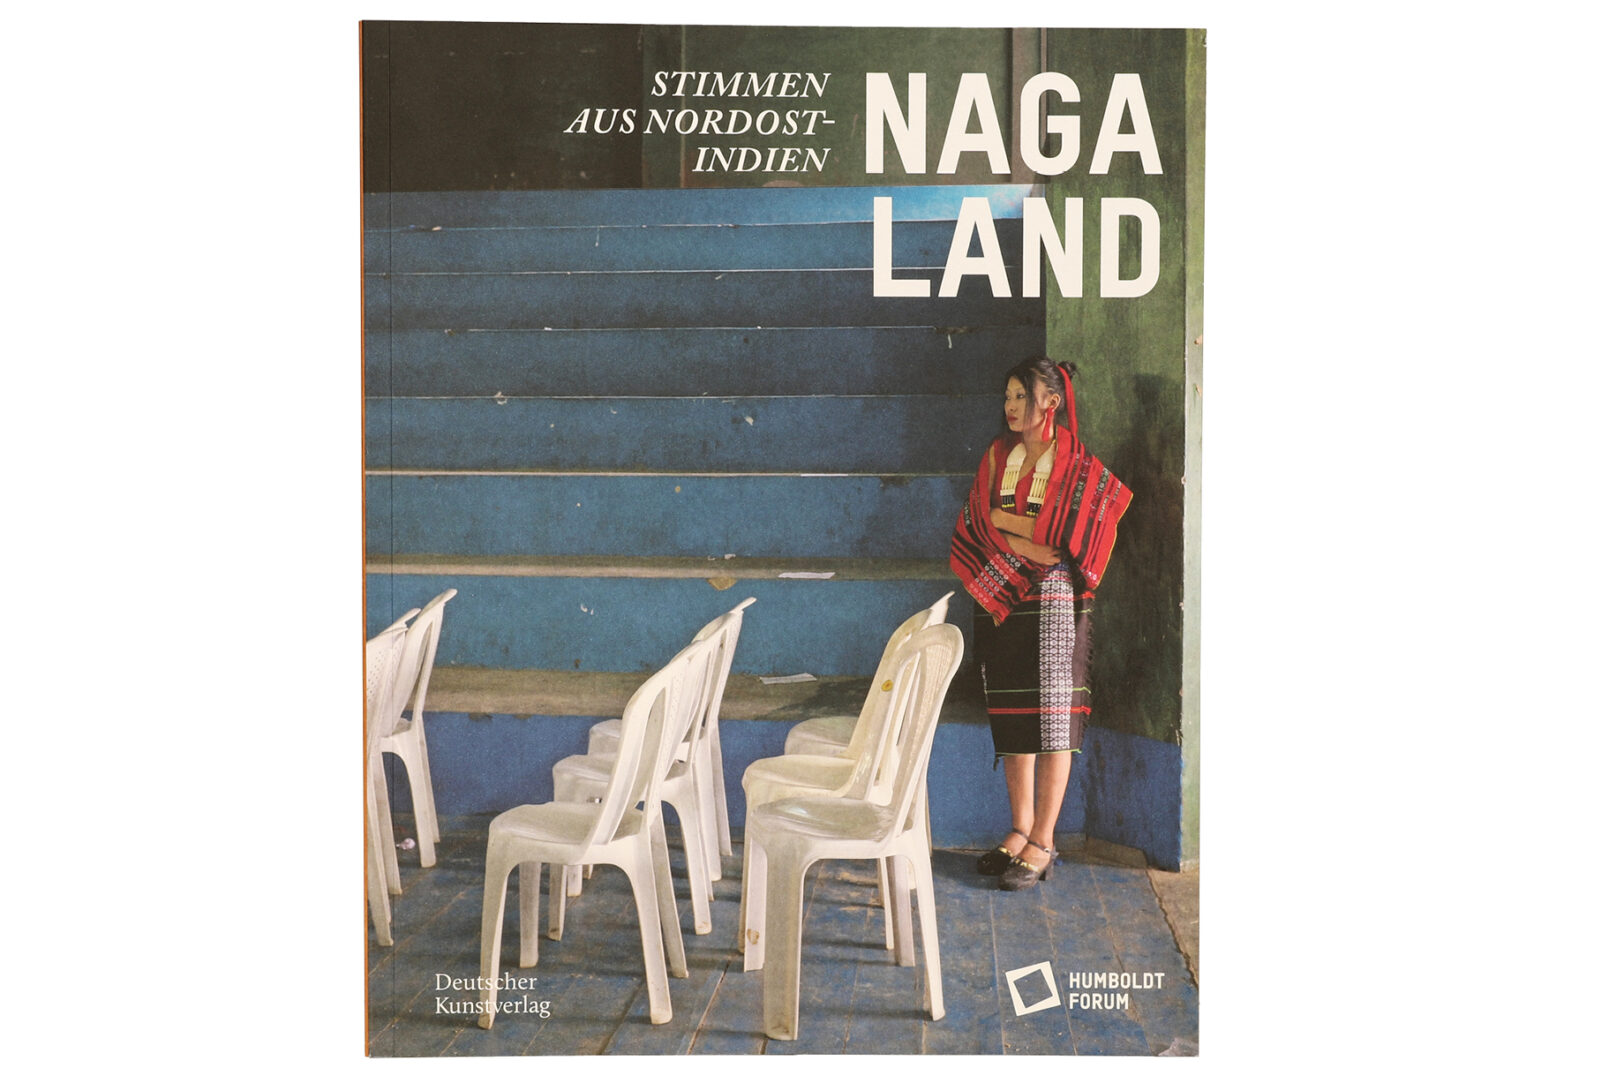 https://e-o-t.de/wordpress/wp-content/uploads/2023/04/Eot-Books_Nagaland_01.jpg